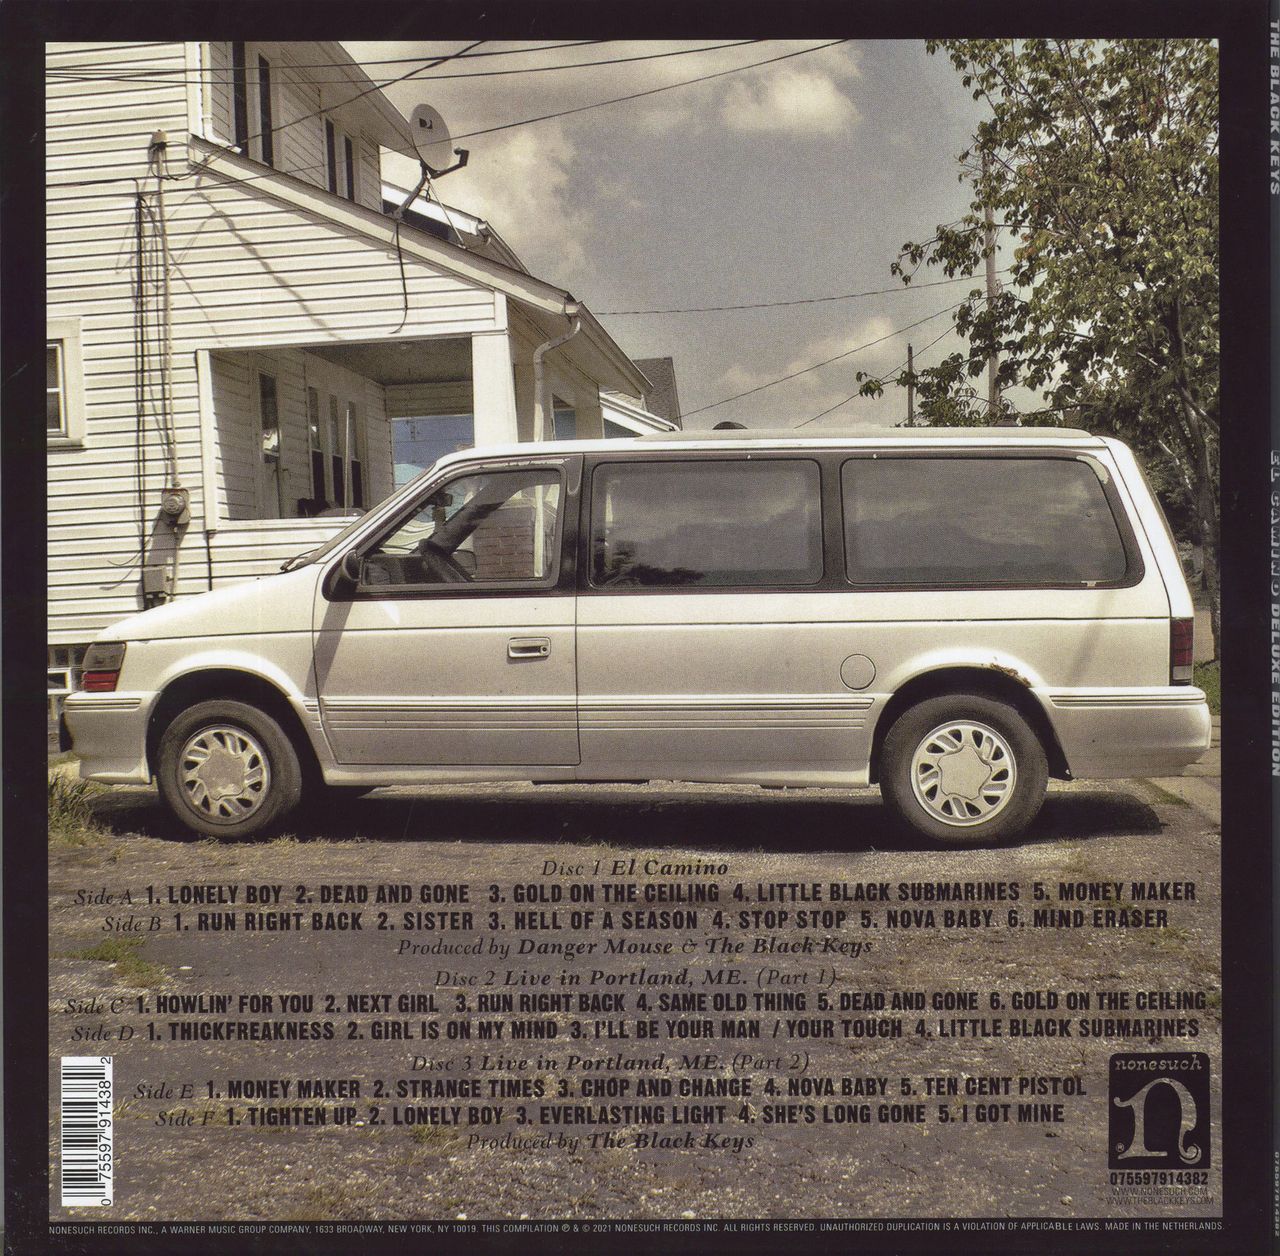 The Black Keys El Camino - White Van Cover - 10th Anniversary US 3-LP vinyl  set